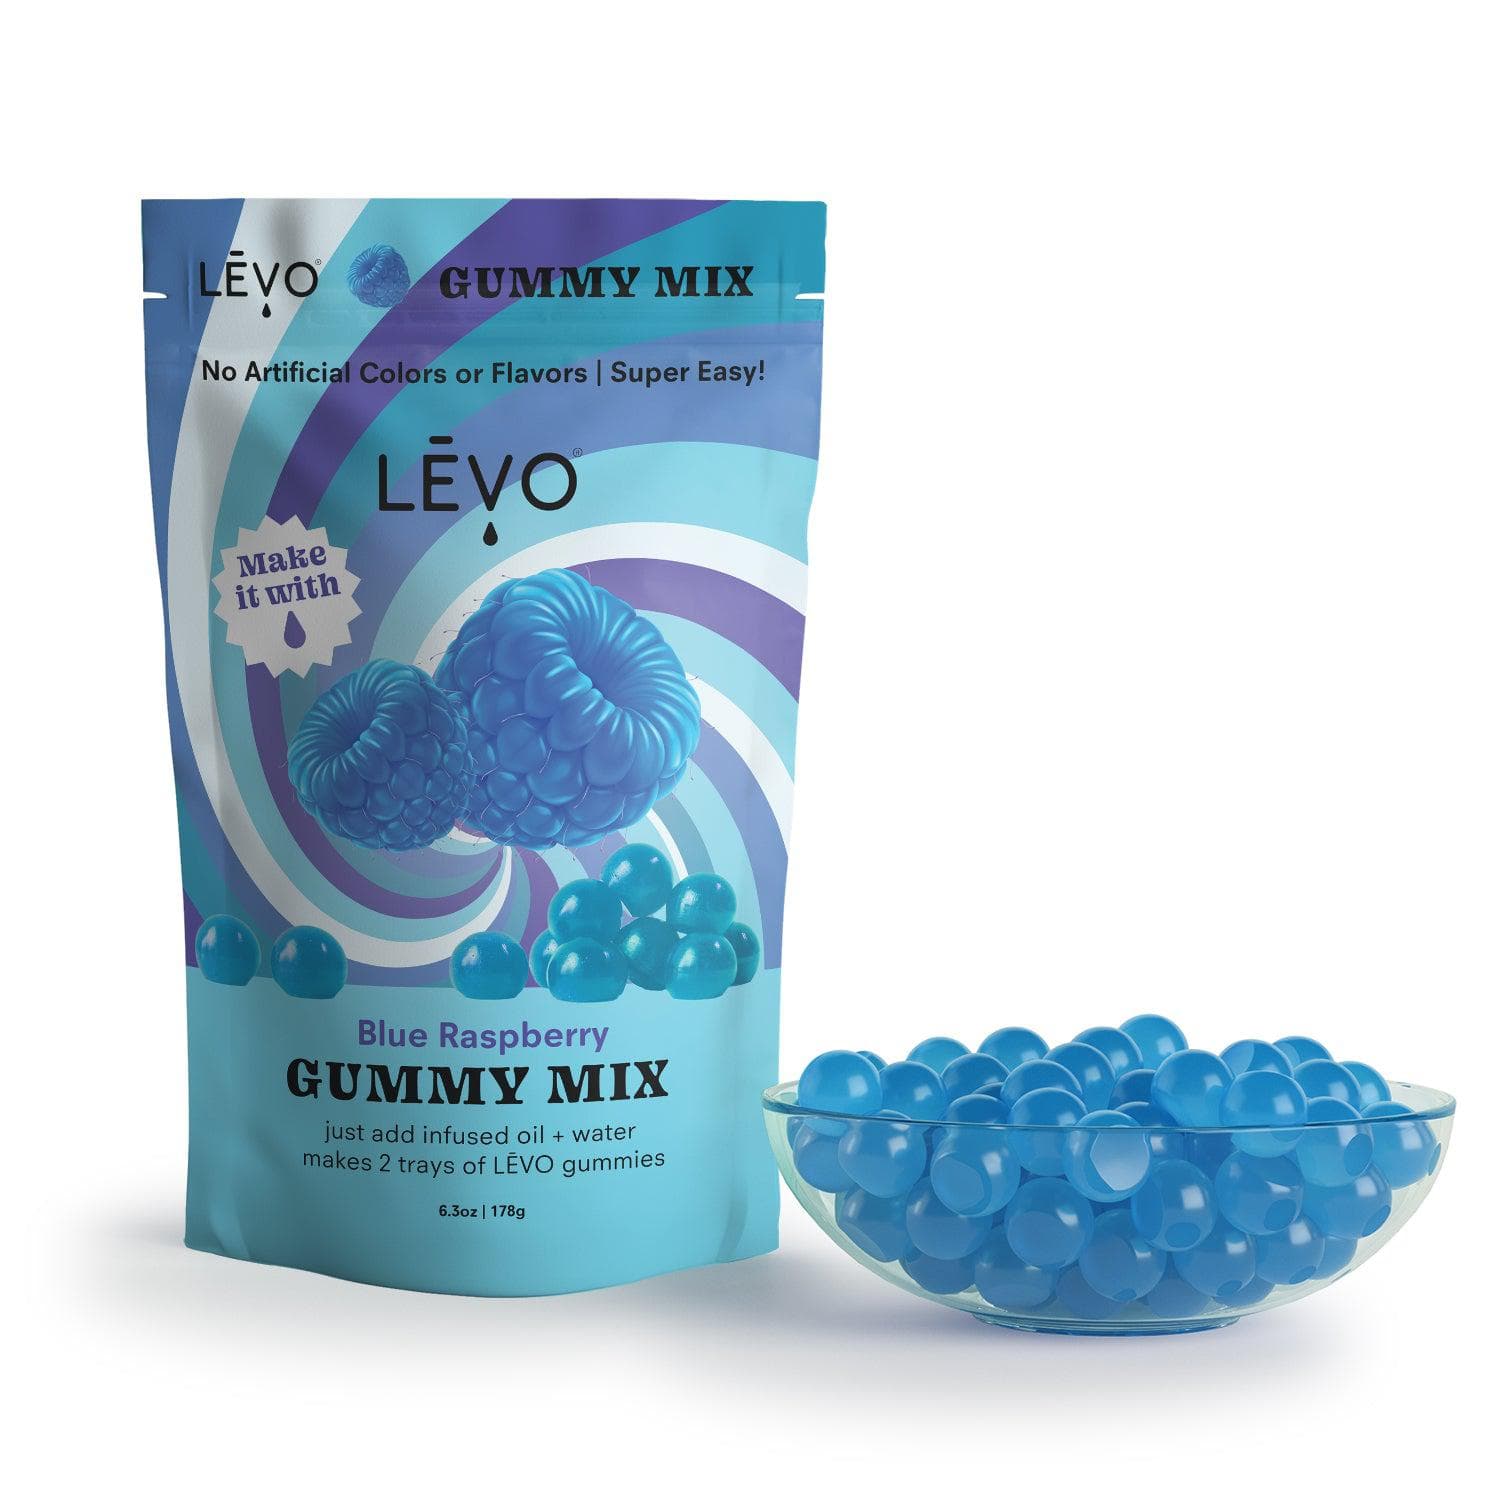 LEVO Gummy Mix in Blue Raspberry flavor